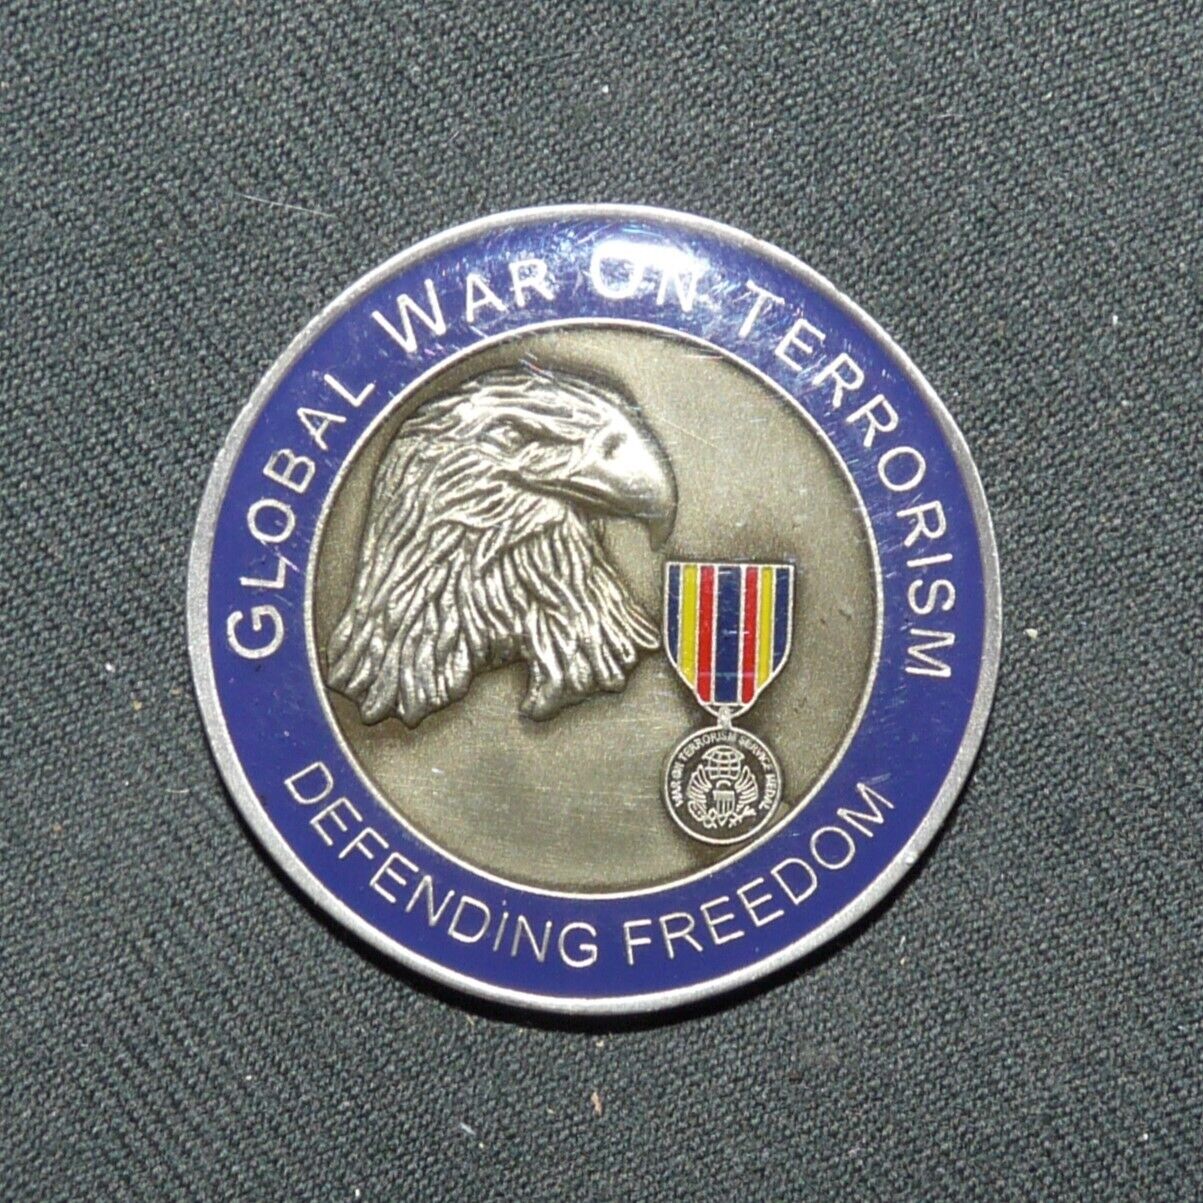 Original USA GWOT Global War on Terrorism Medal Challenge Coin